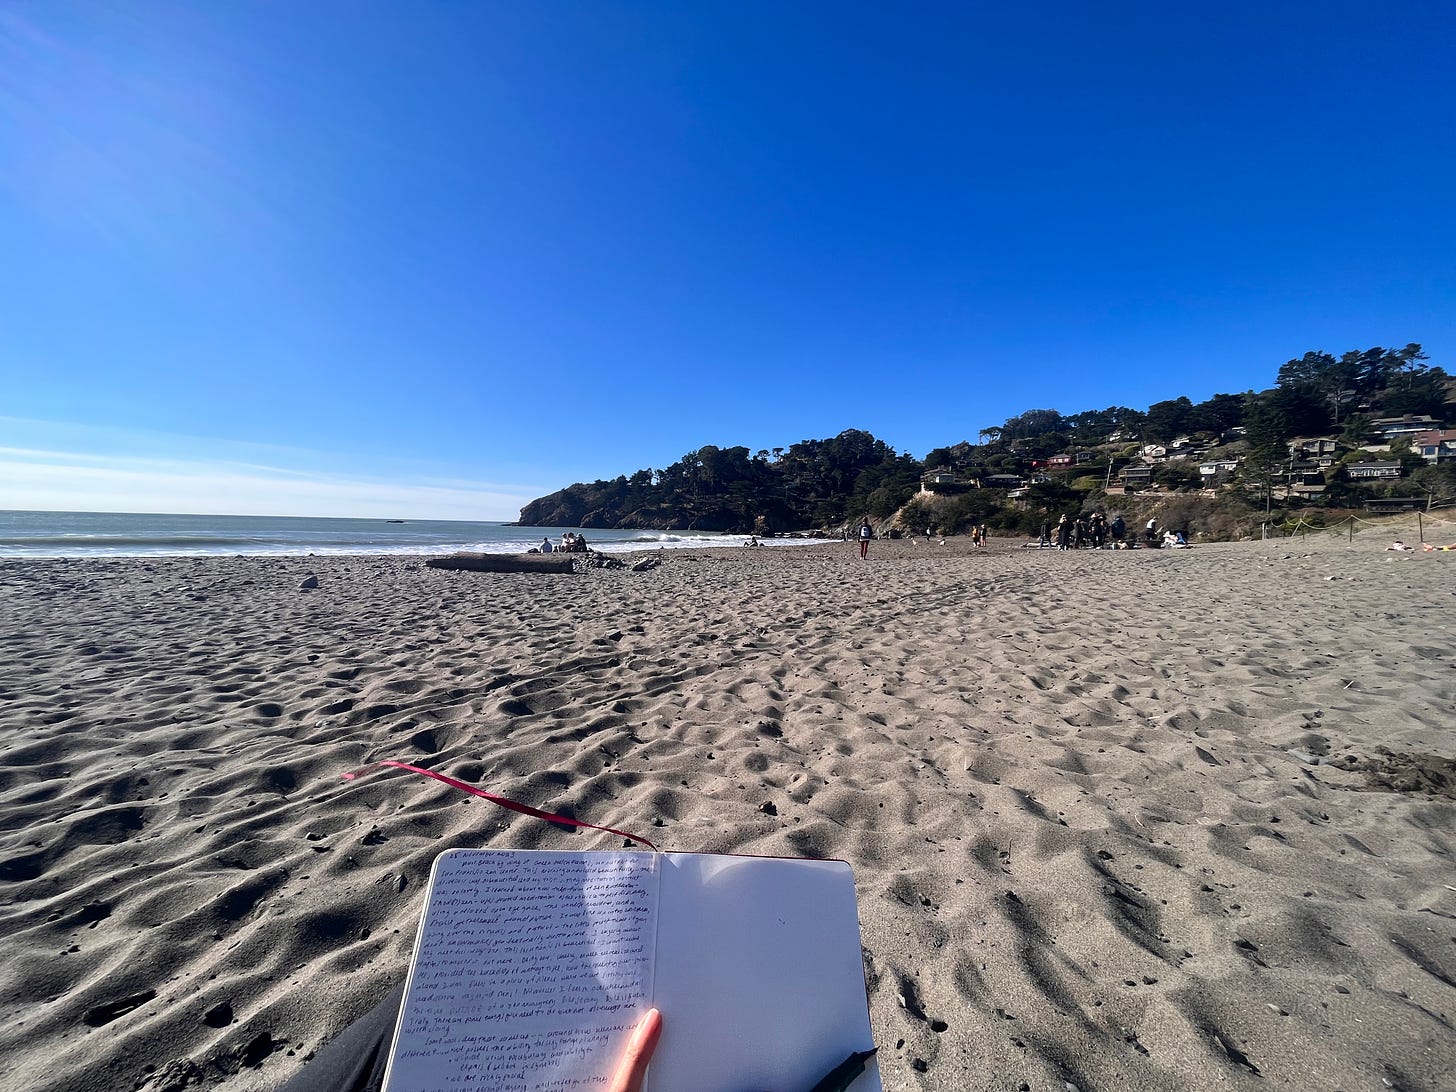 Journaling at muir beach